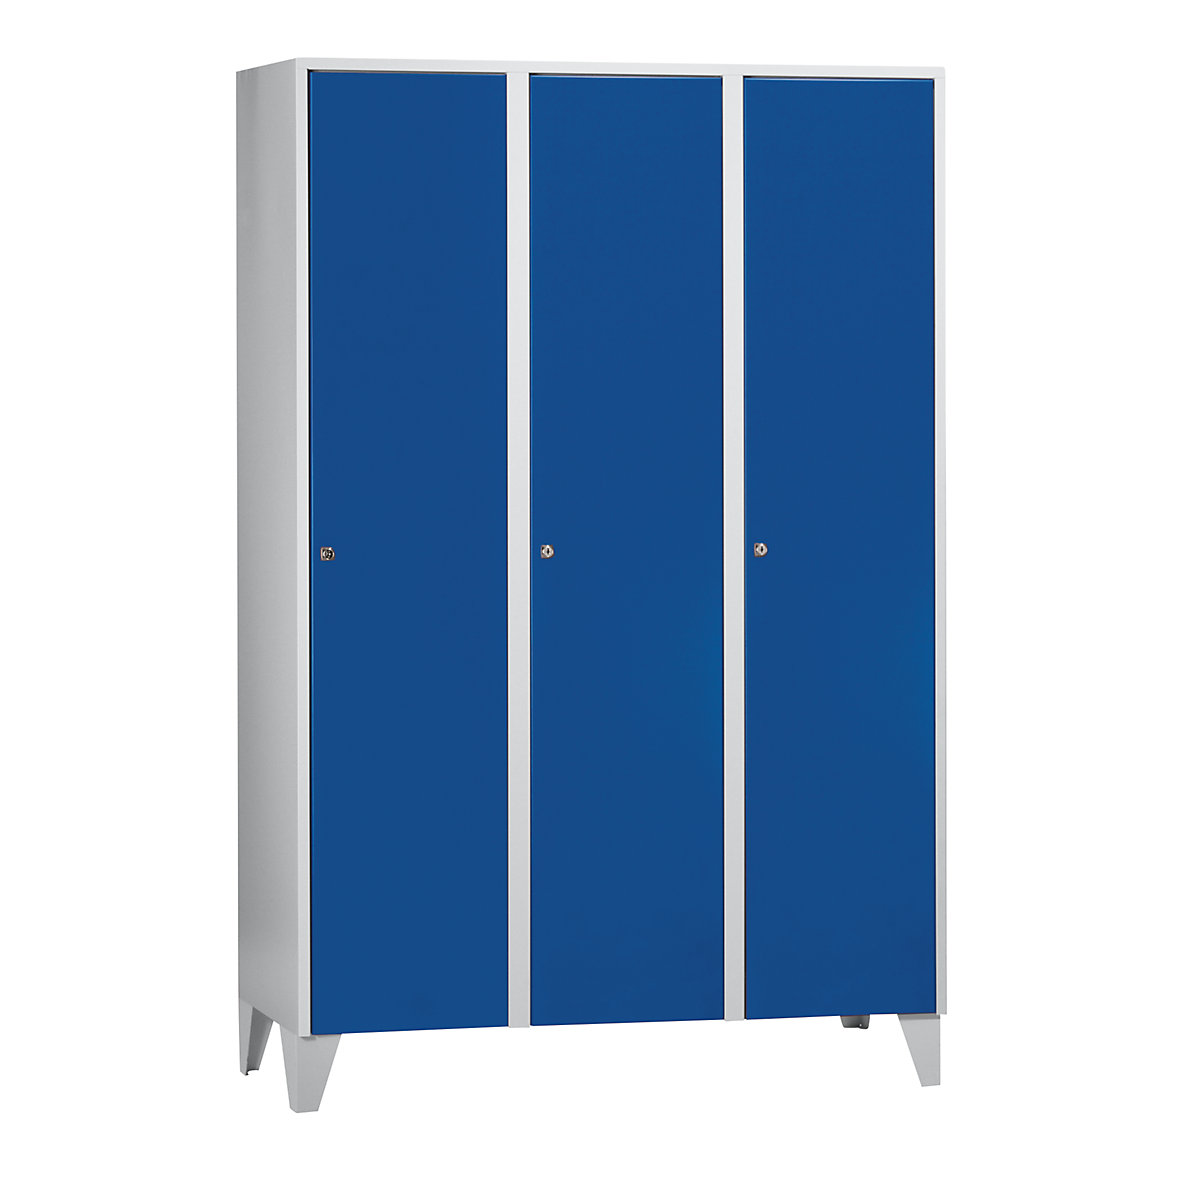 Cloakroom locker with feet – Wolf, HxWxD 1850 x 1200 x 500 mm, 3 compartments, gentian blue-5